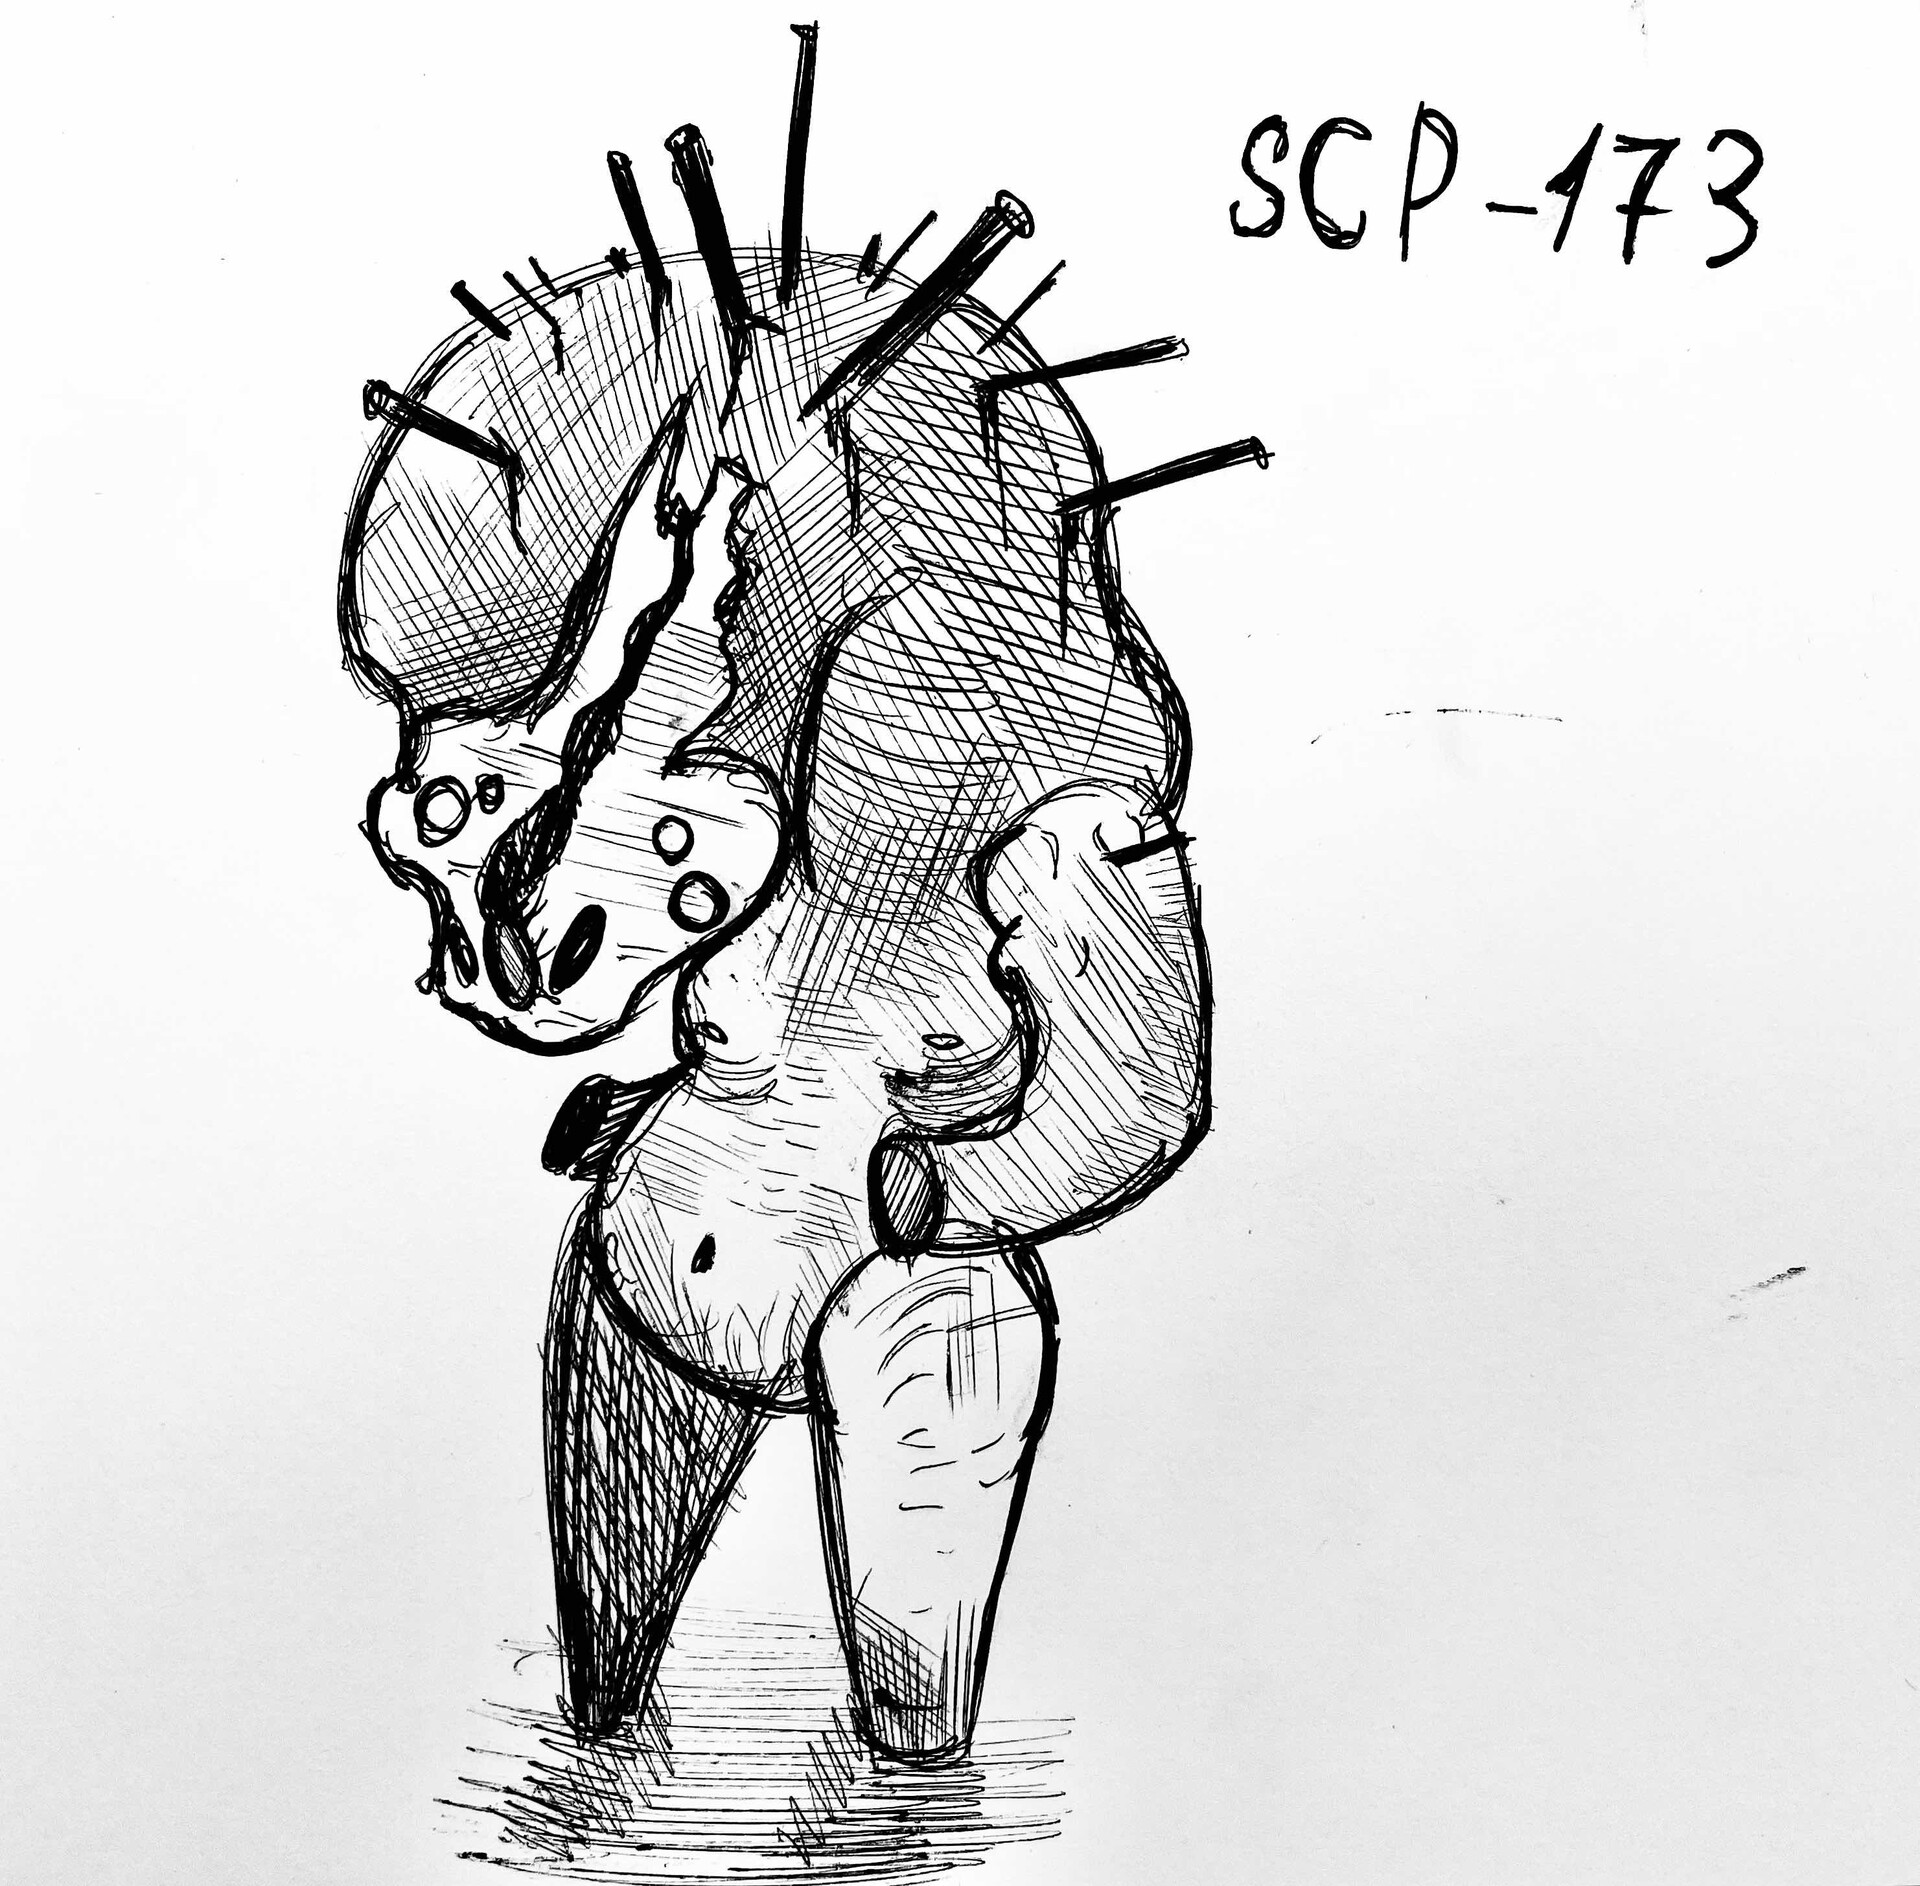 ArtStation - SCP-173